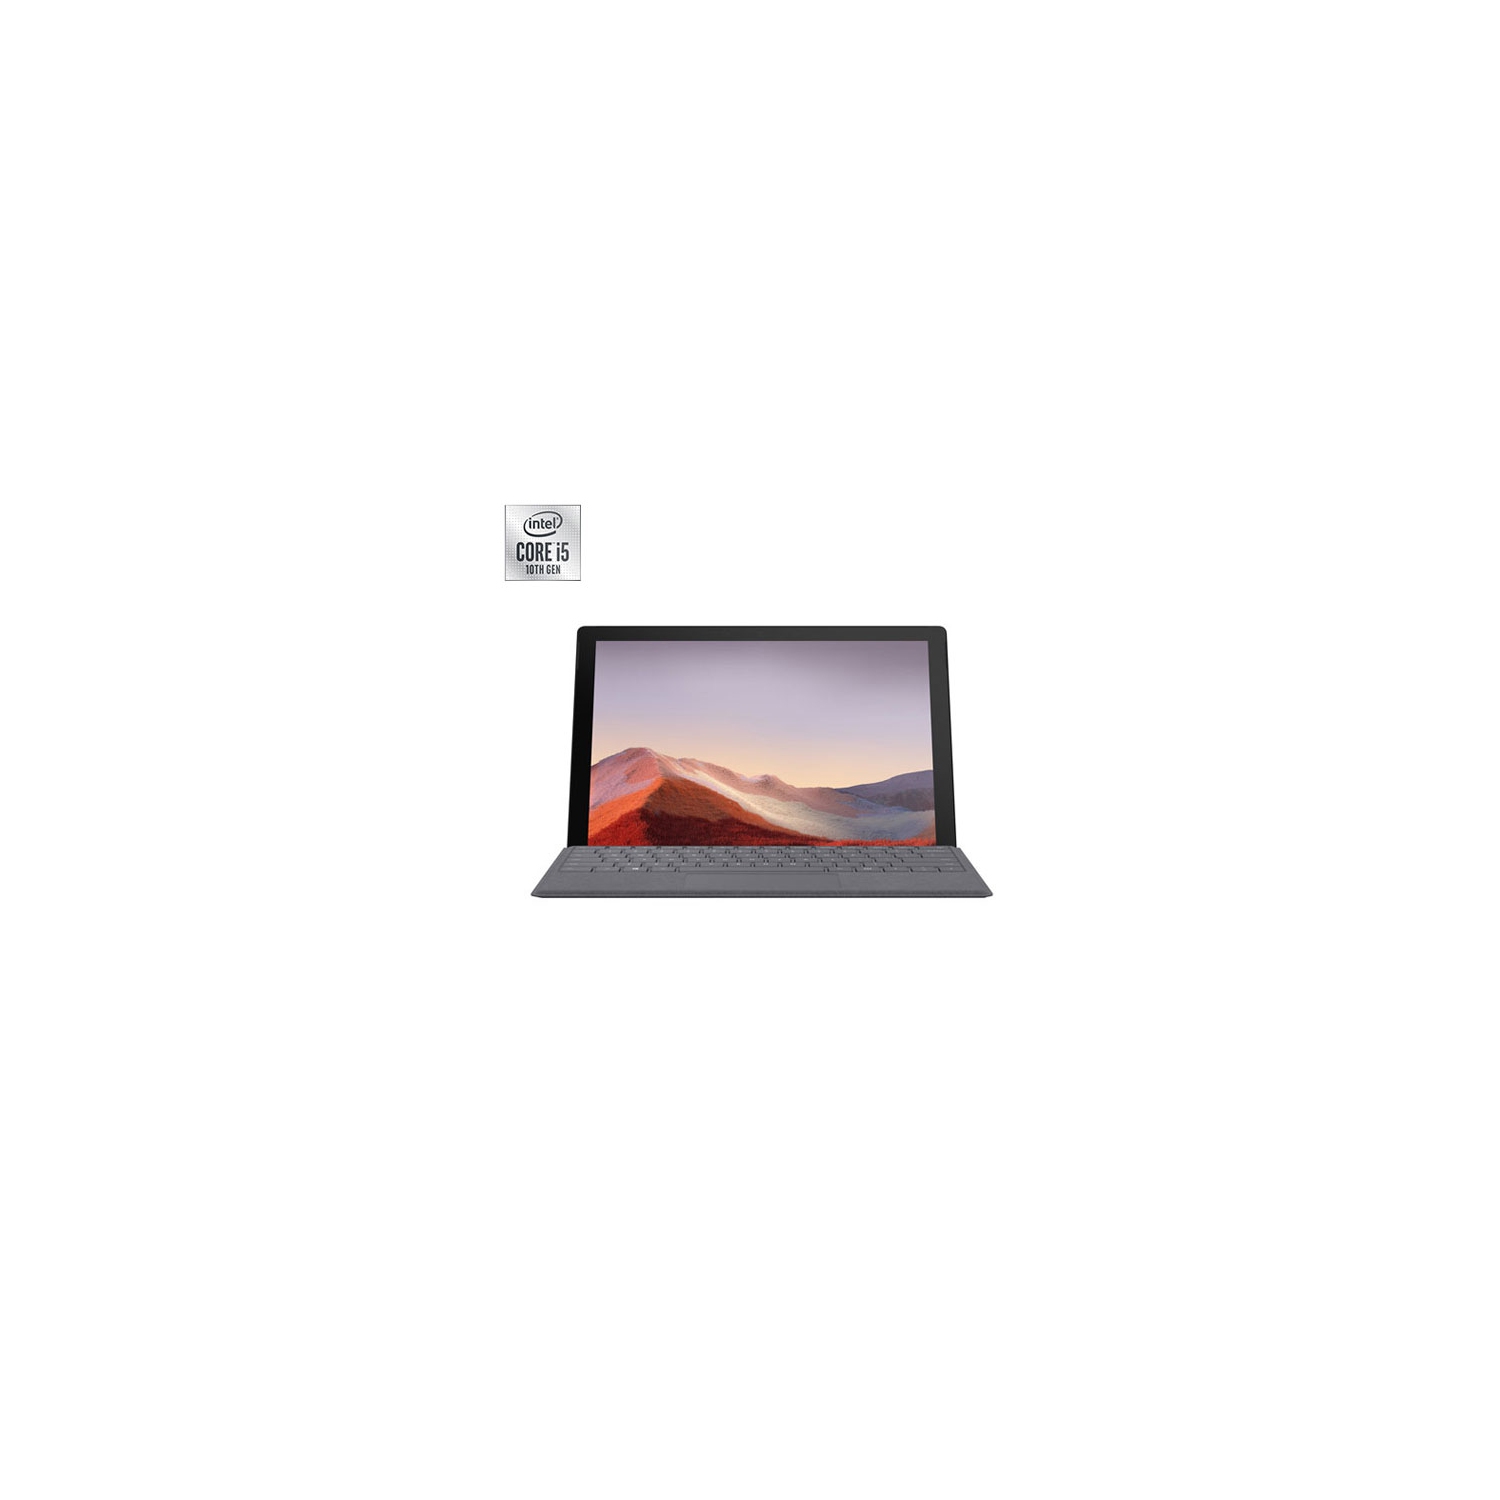 Refurbished (Good) - Microsoft Surface Pro 7 12.3" Tablet with 10th Gen Intel Core i5 / 8GB RAM / 256GB / Windows 10 - Black